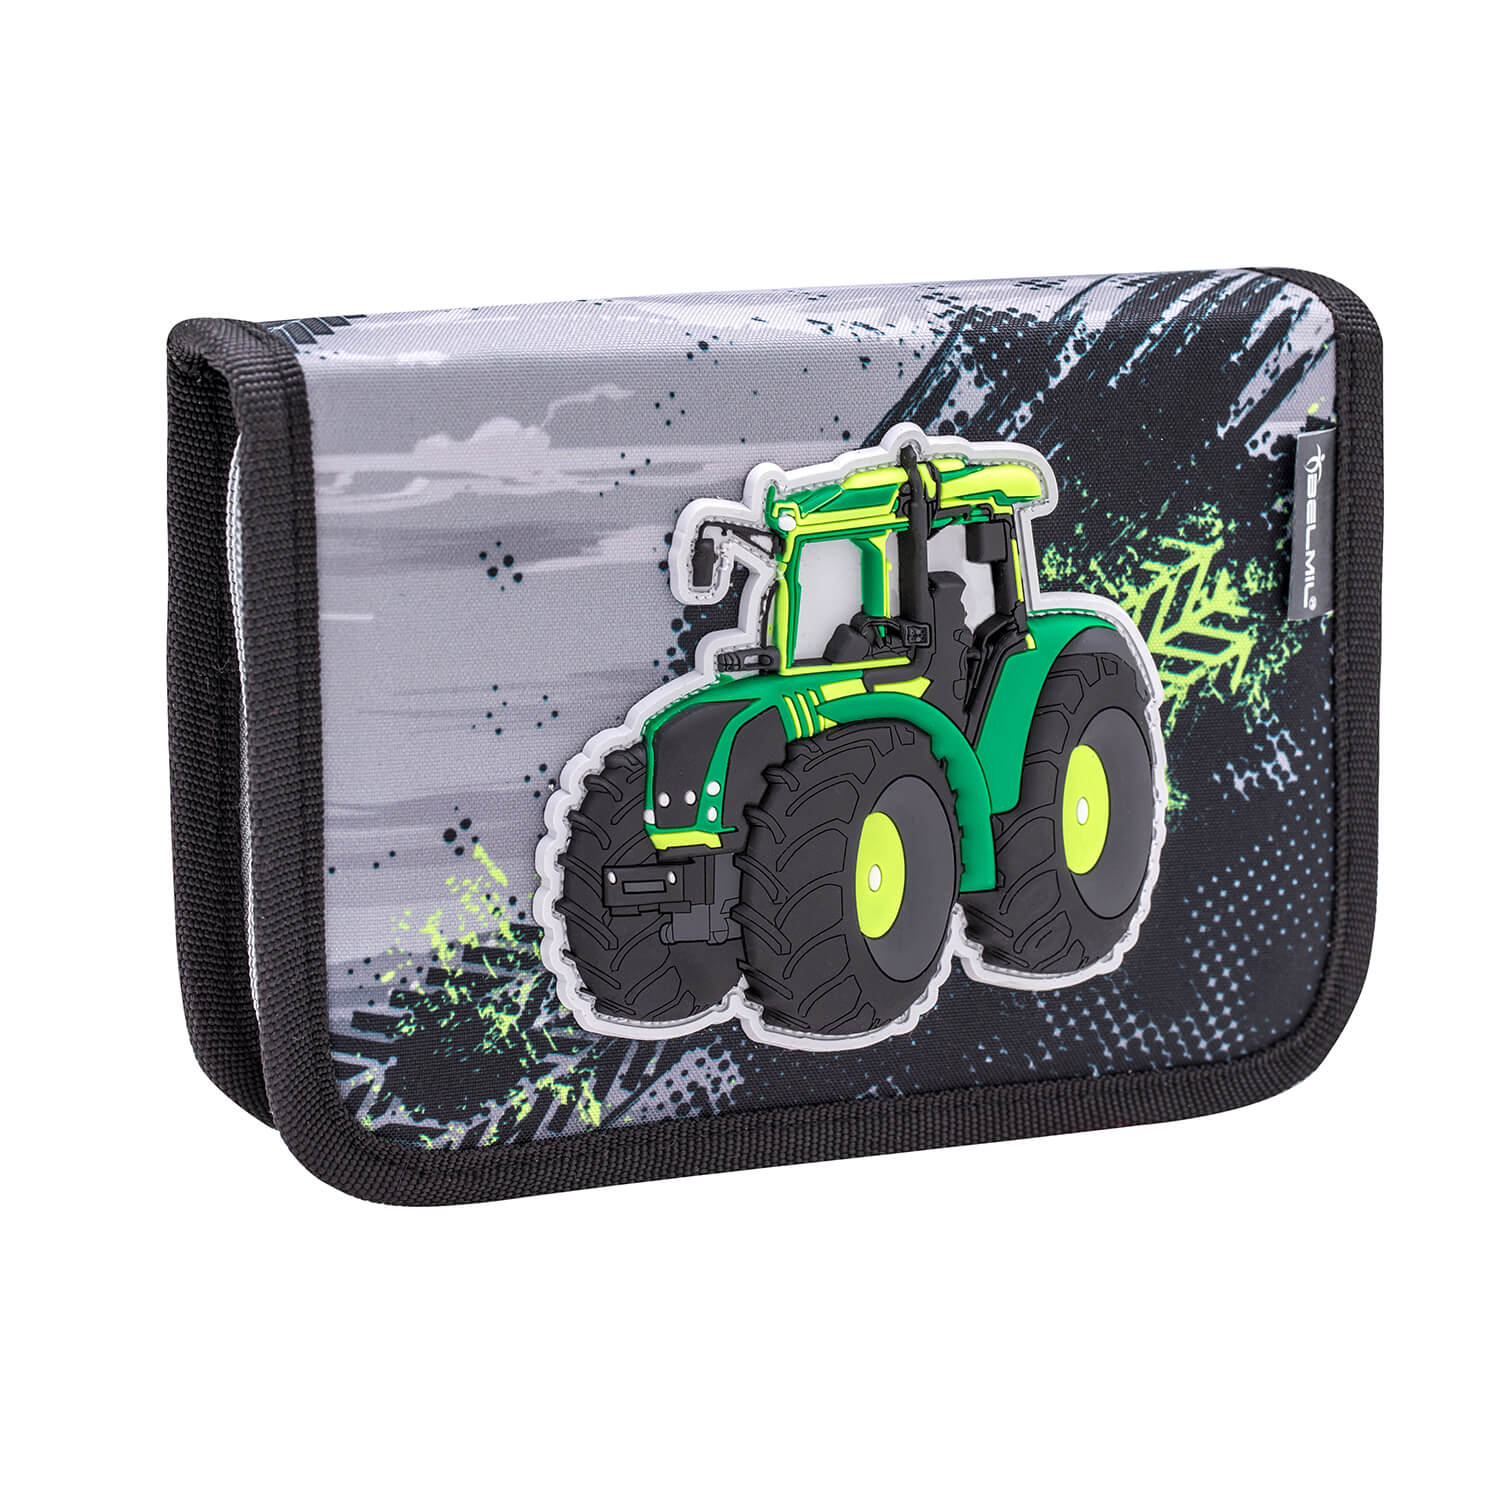 Customize Me Green Tractor schoolbag set 4 pcs